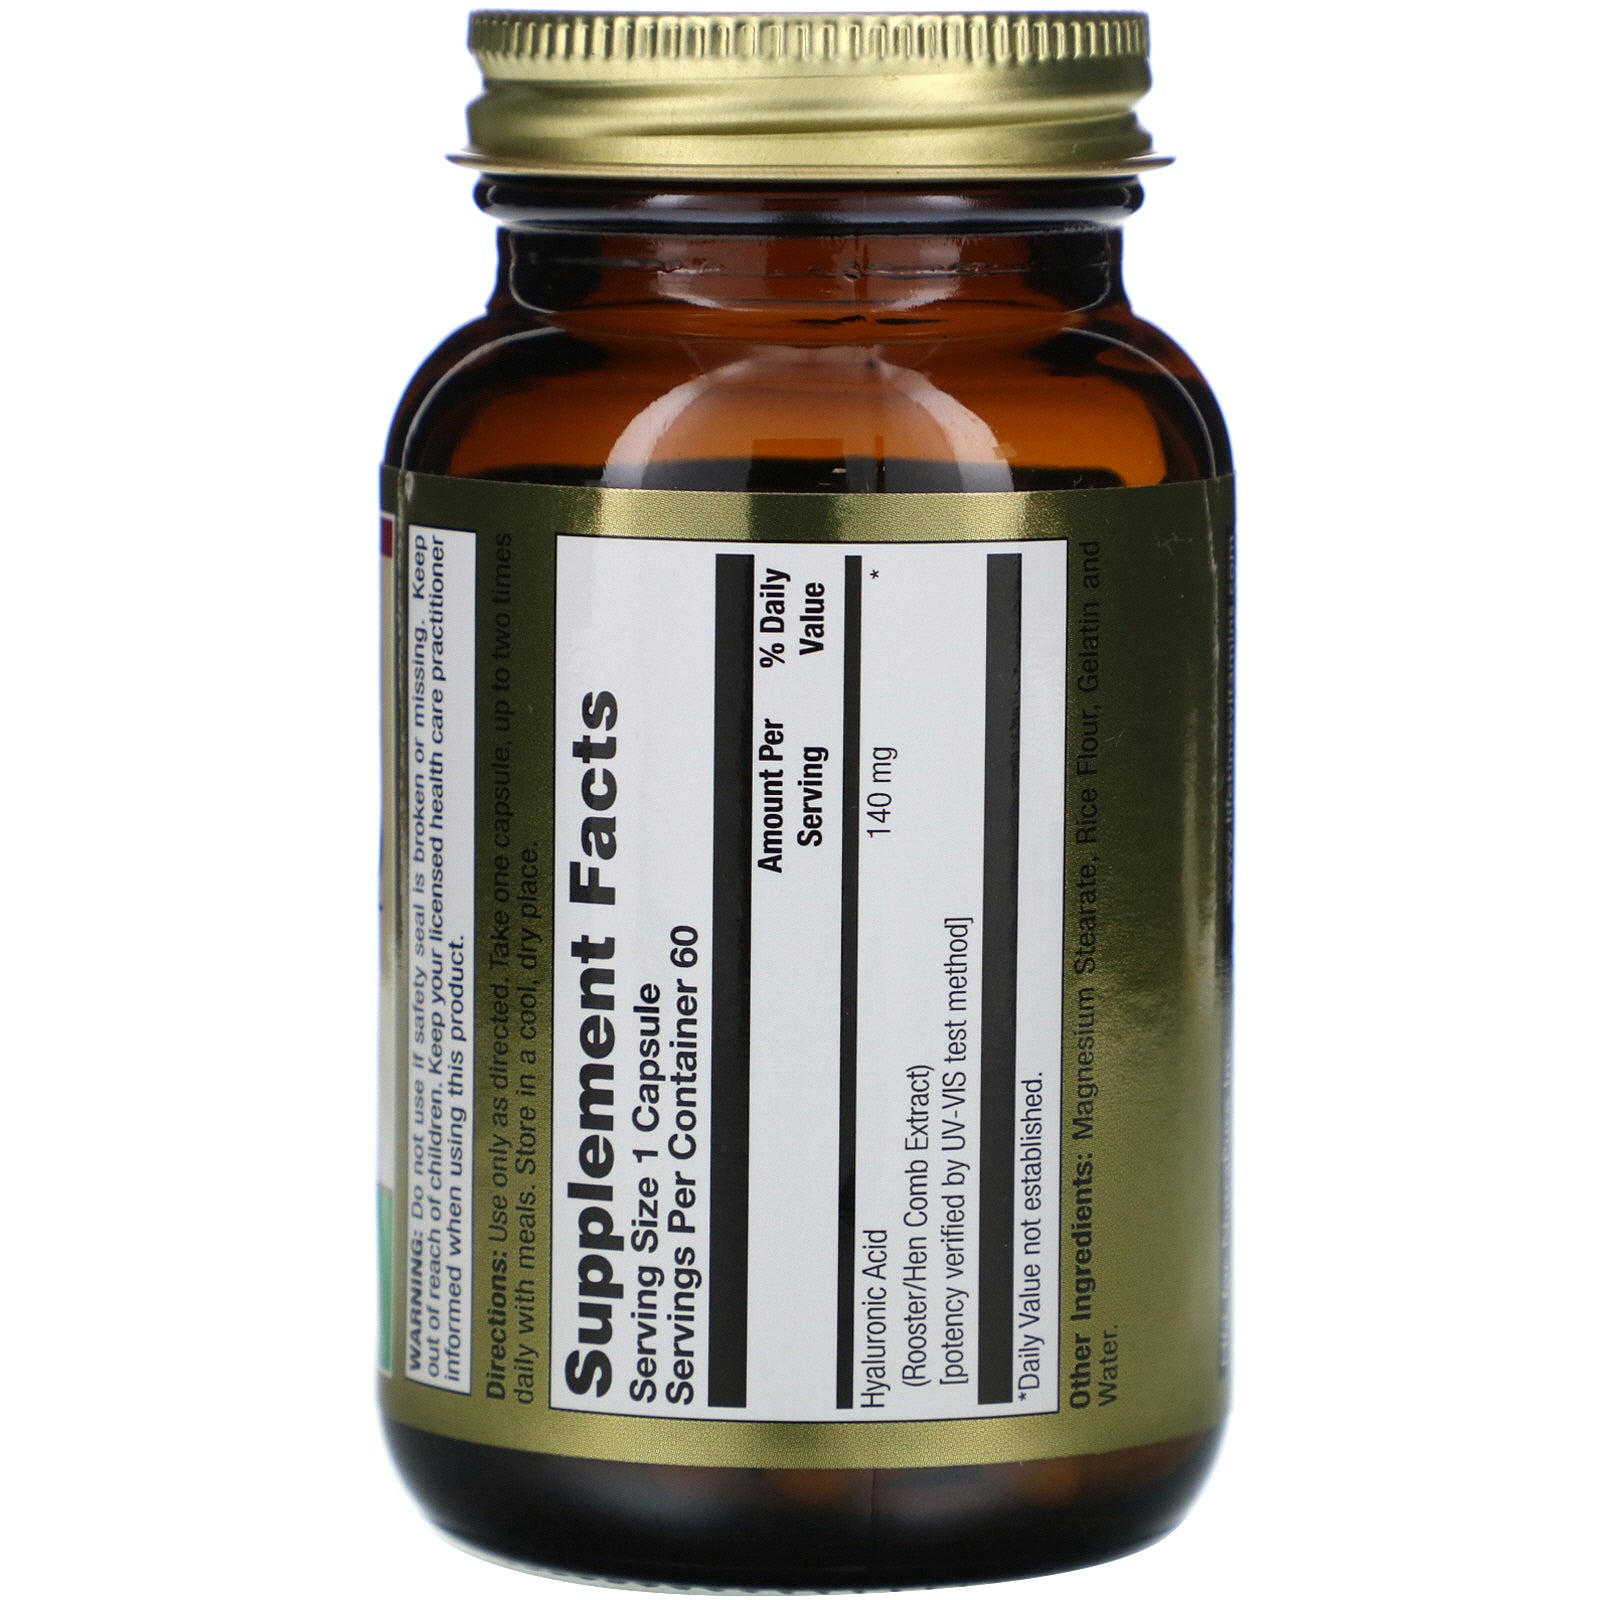 LifeTime Vitamins, Natural Hyaluronic Acid, 140 mg, 60 Capsules